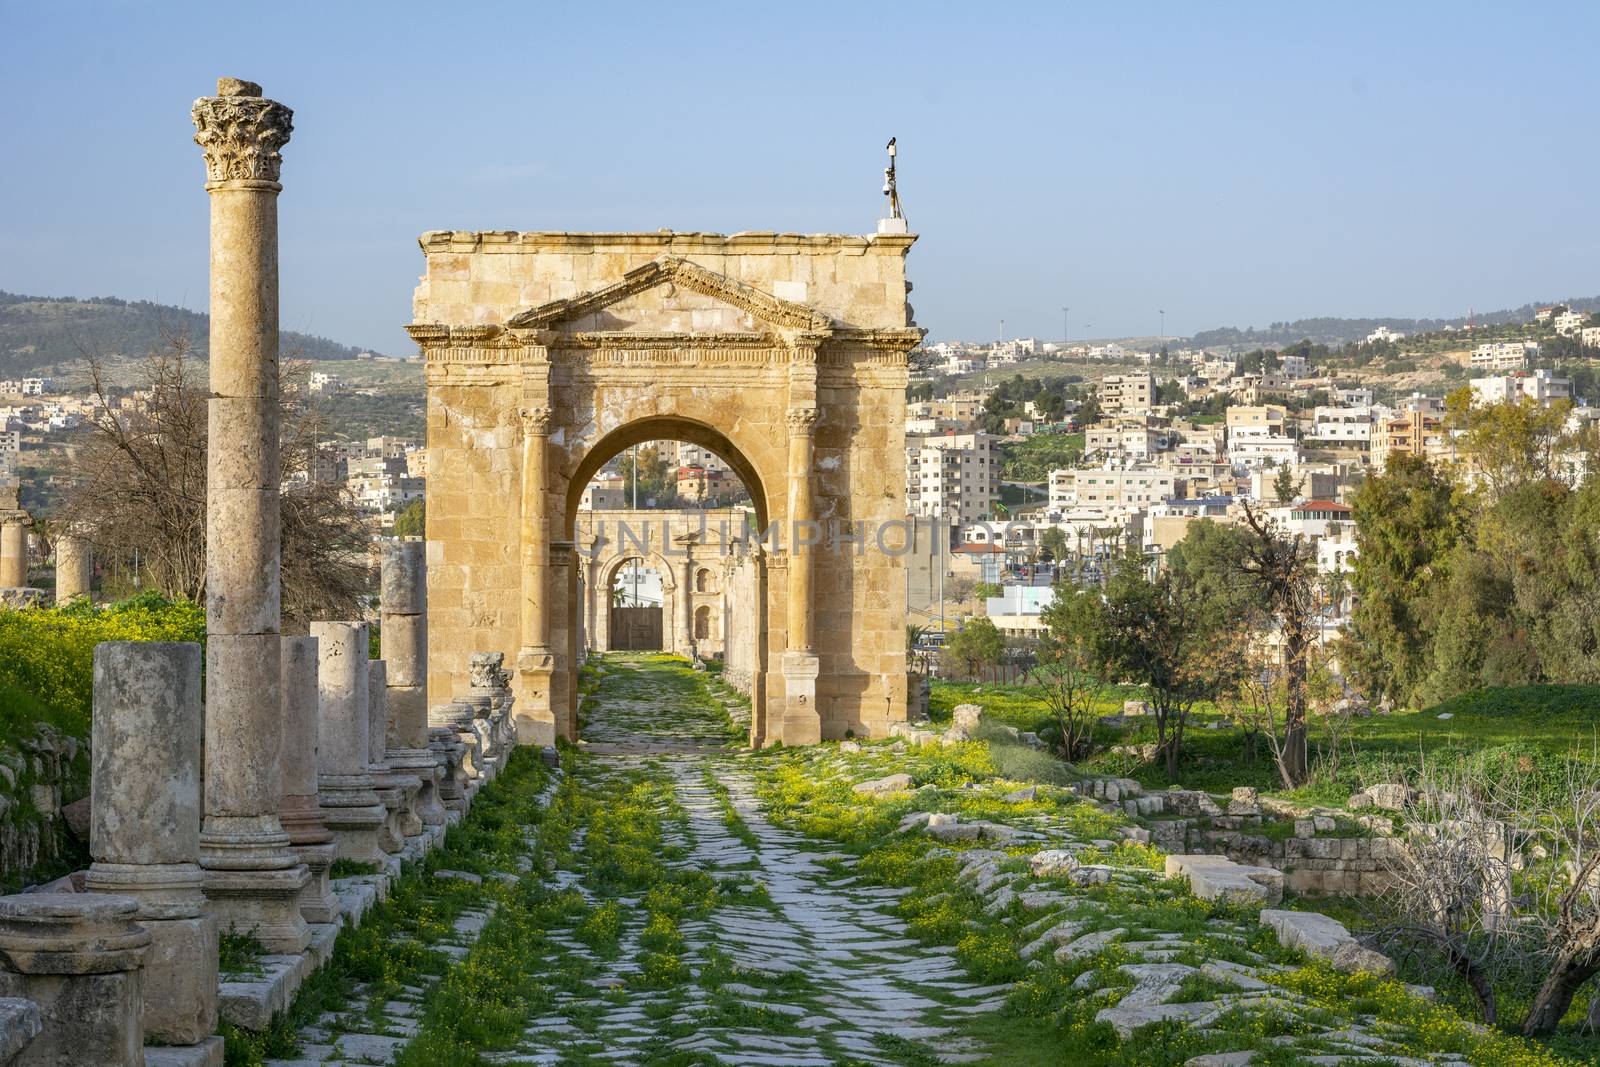 Northern gate of the roman ruins site at Gerasa, Jerash, Jordan by kb79